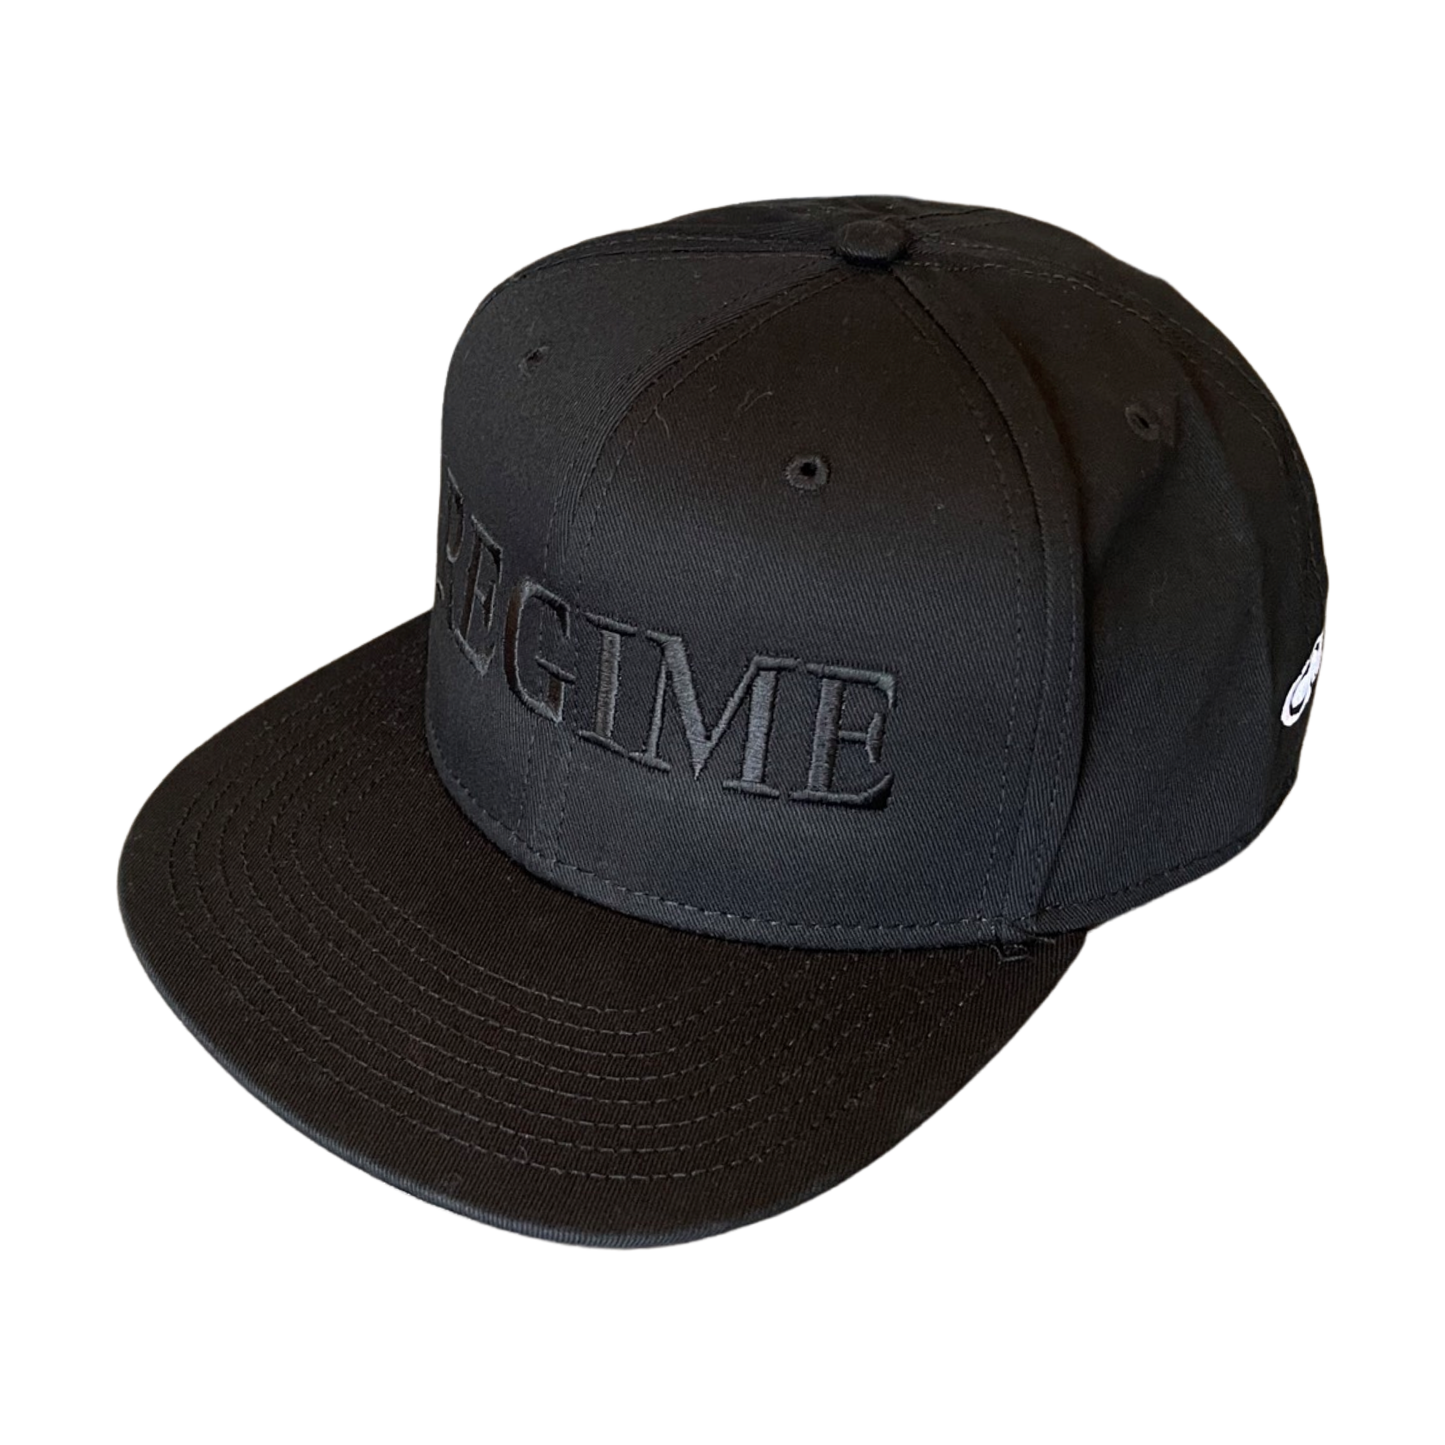 Regime Snapback Hat - Black on Black